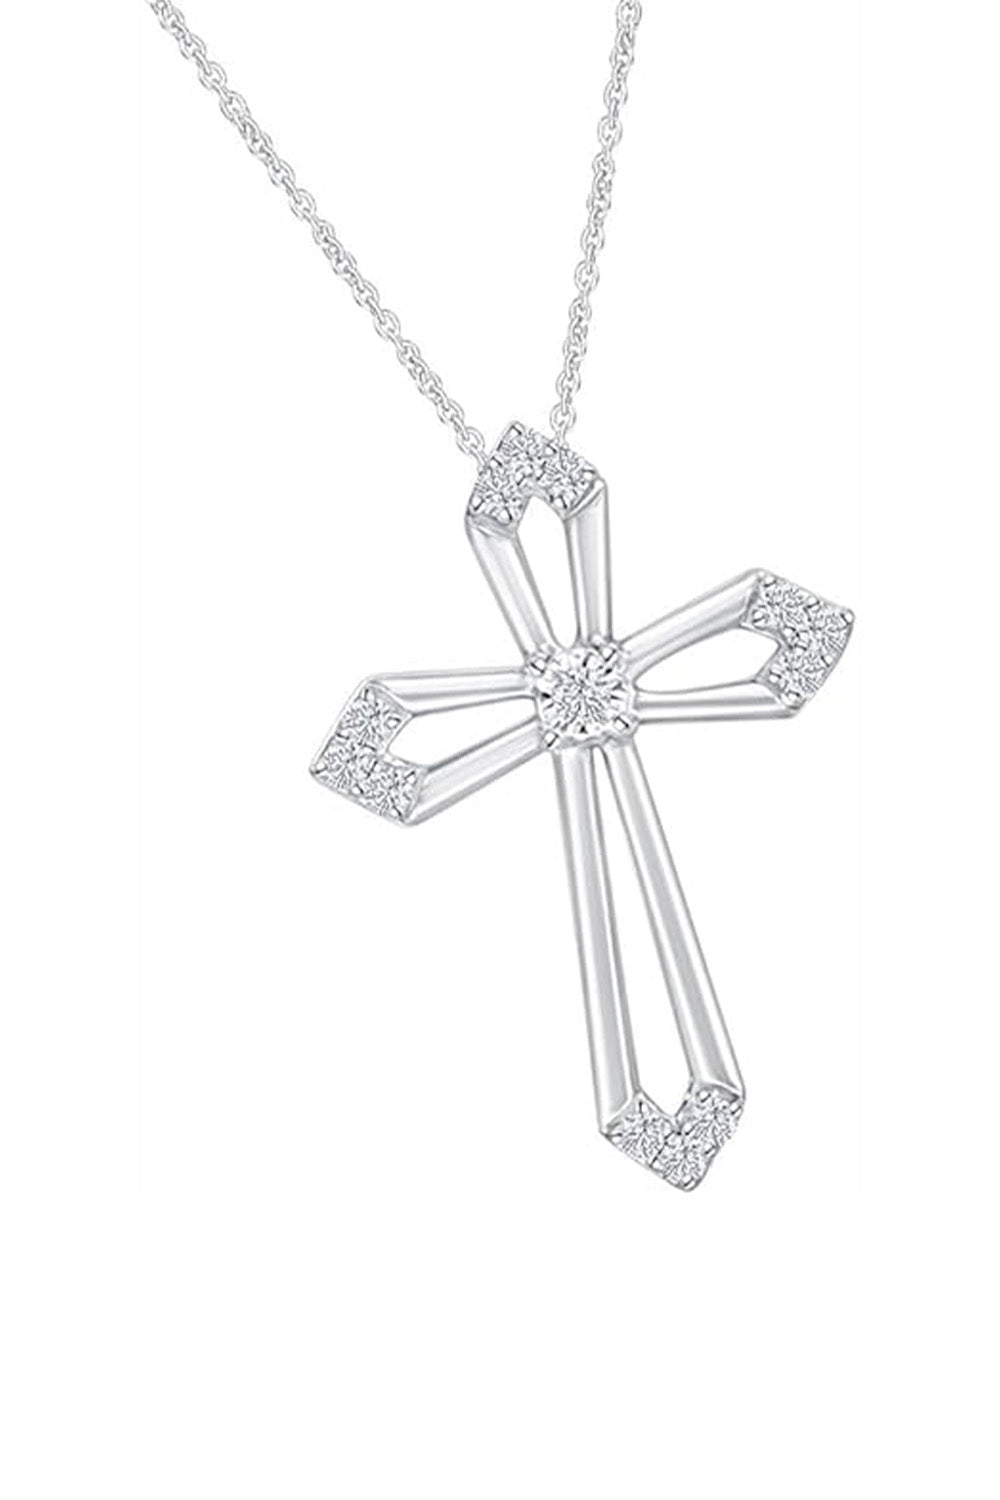 White Gold Color Open Cross Pendant Necklace, Trending Necklaces